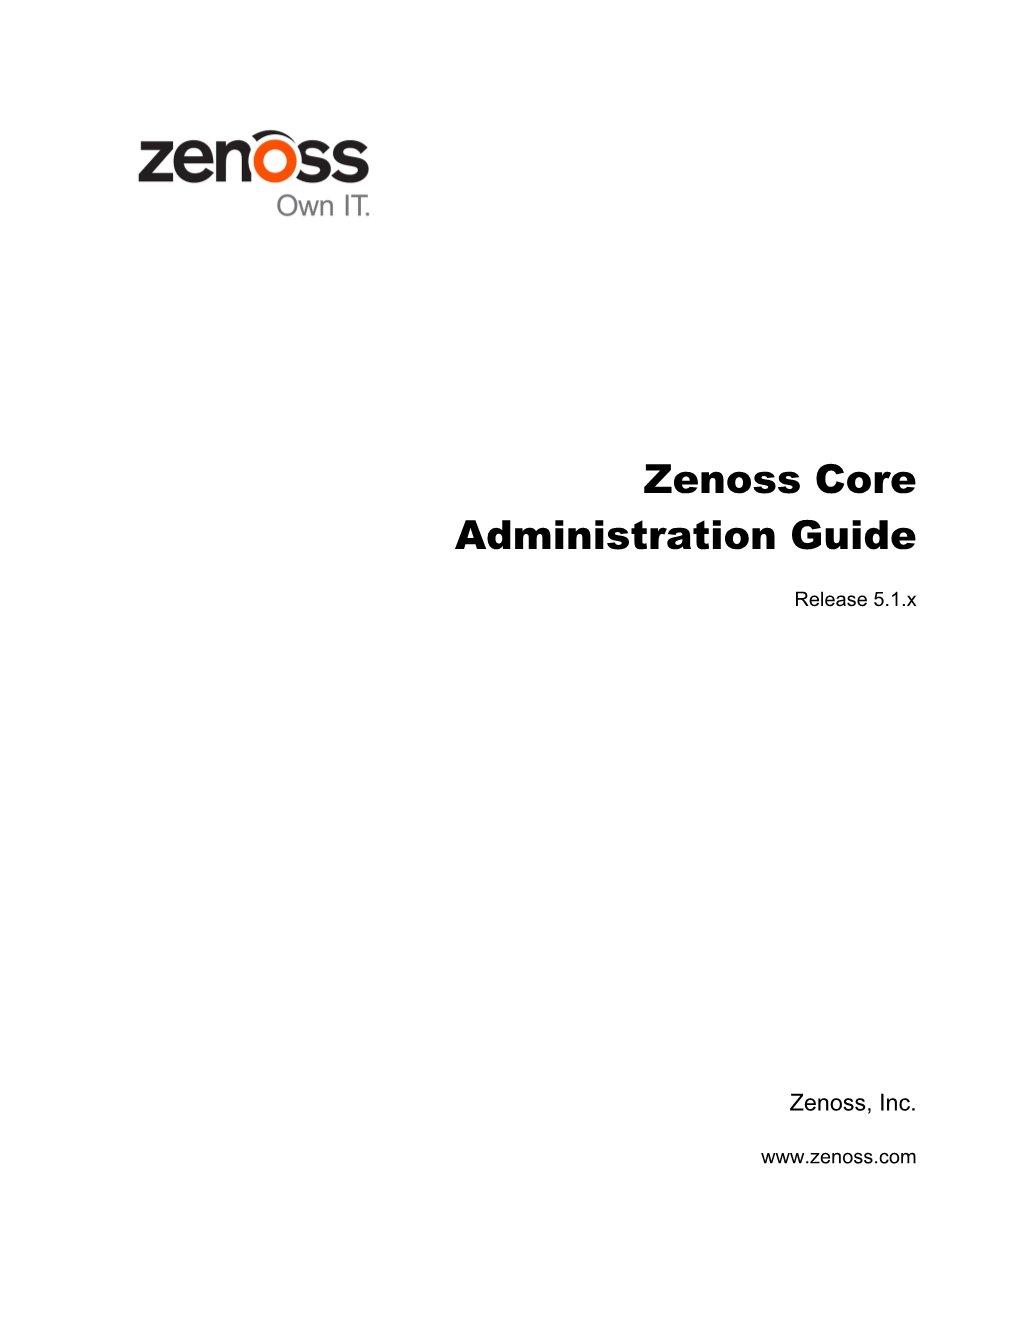 Zenoss Core Administration Guide